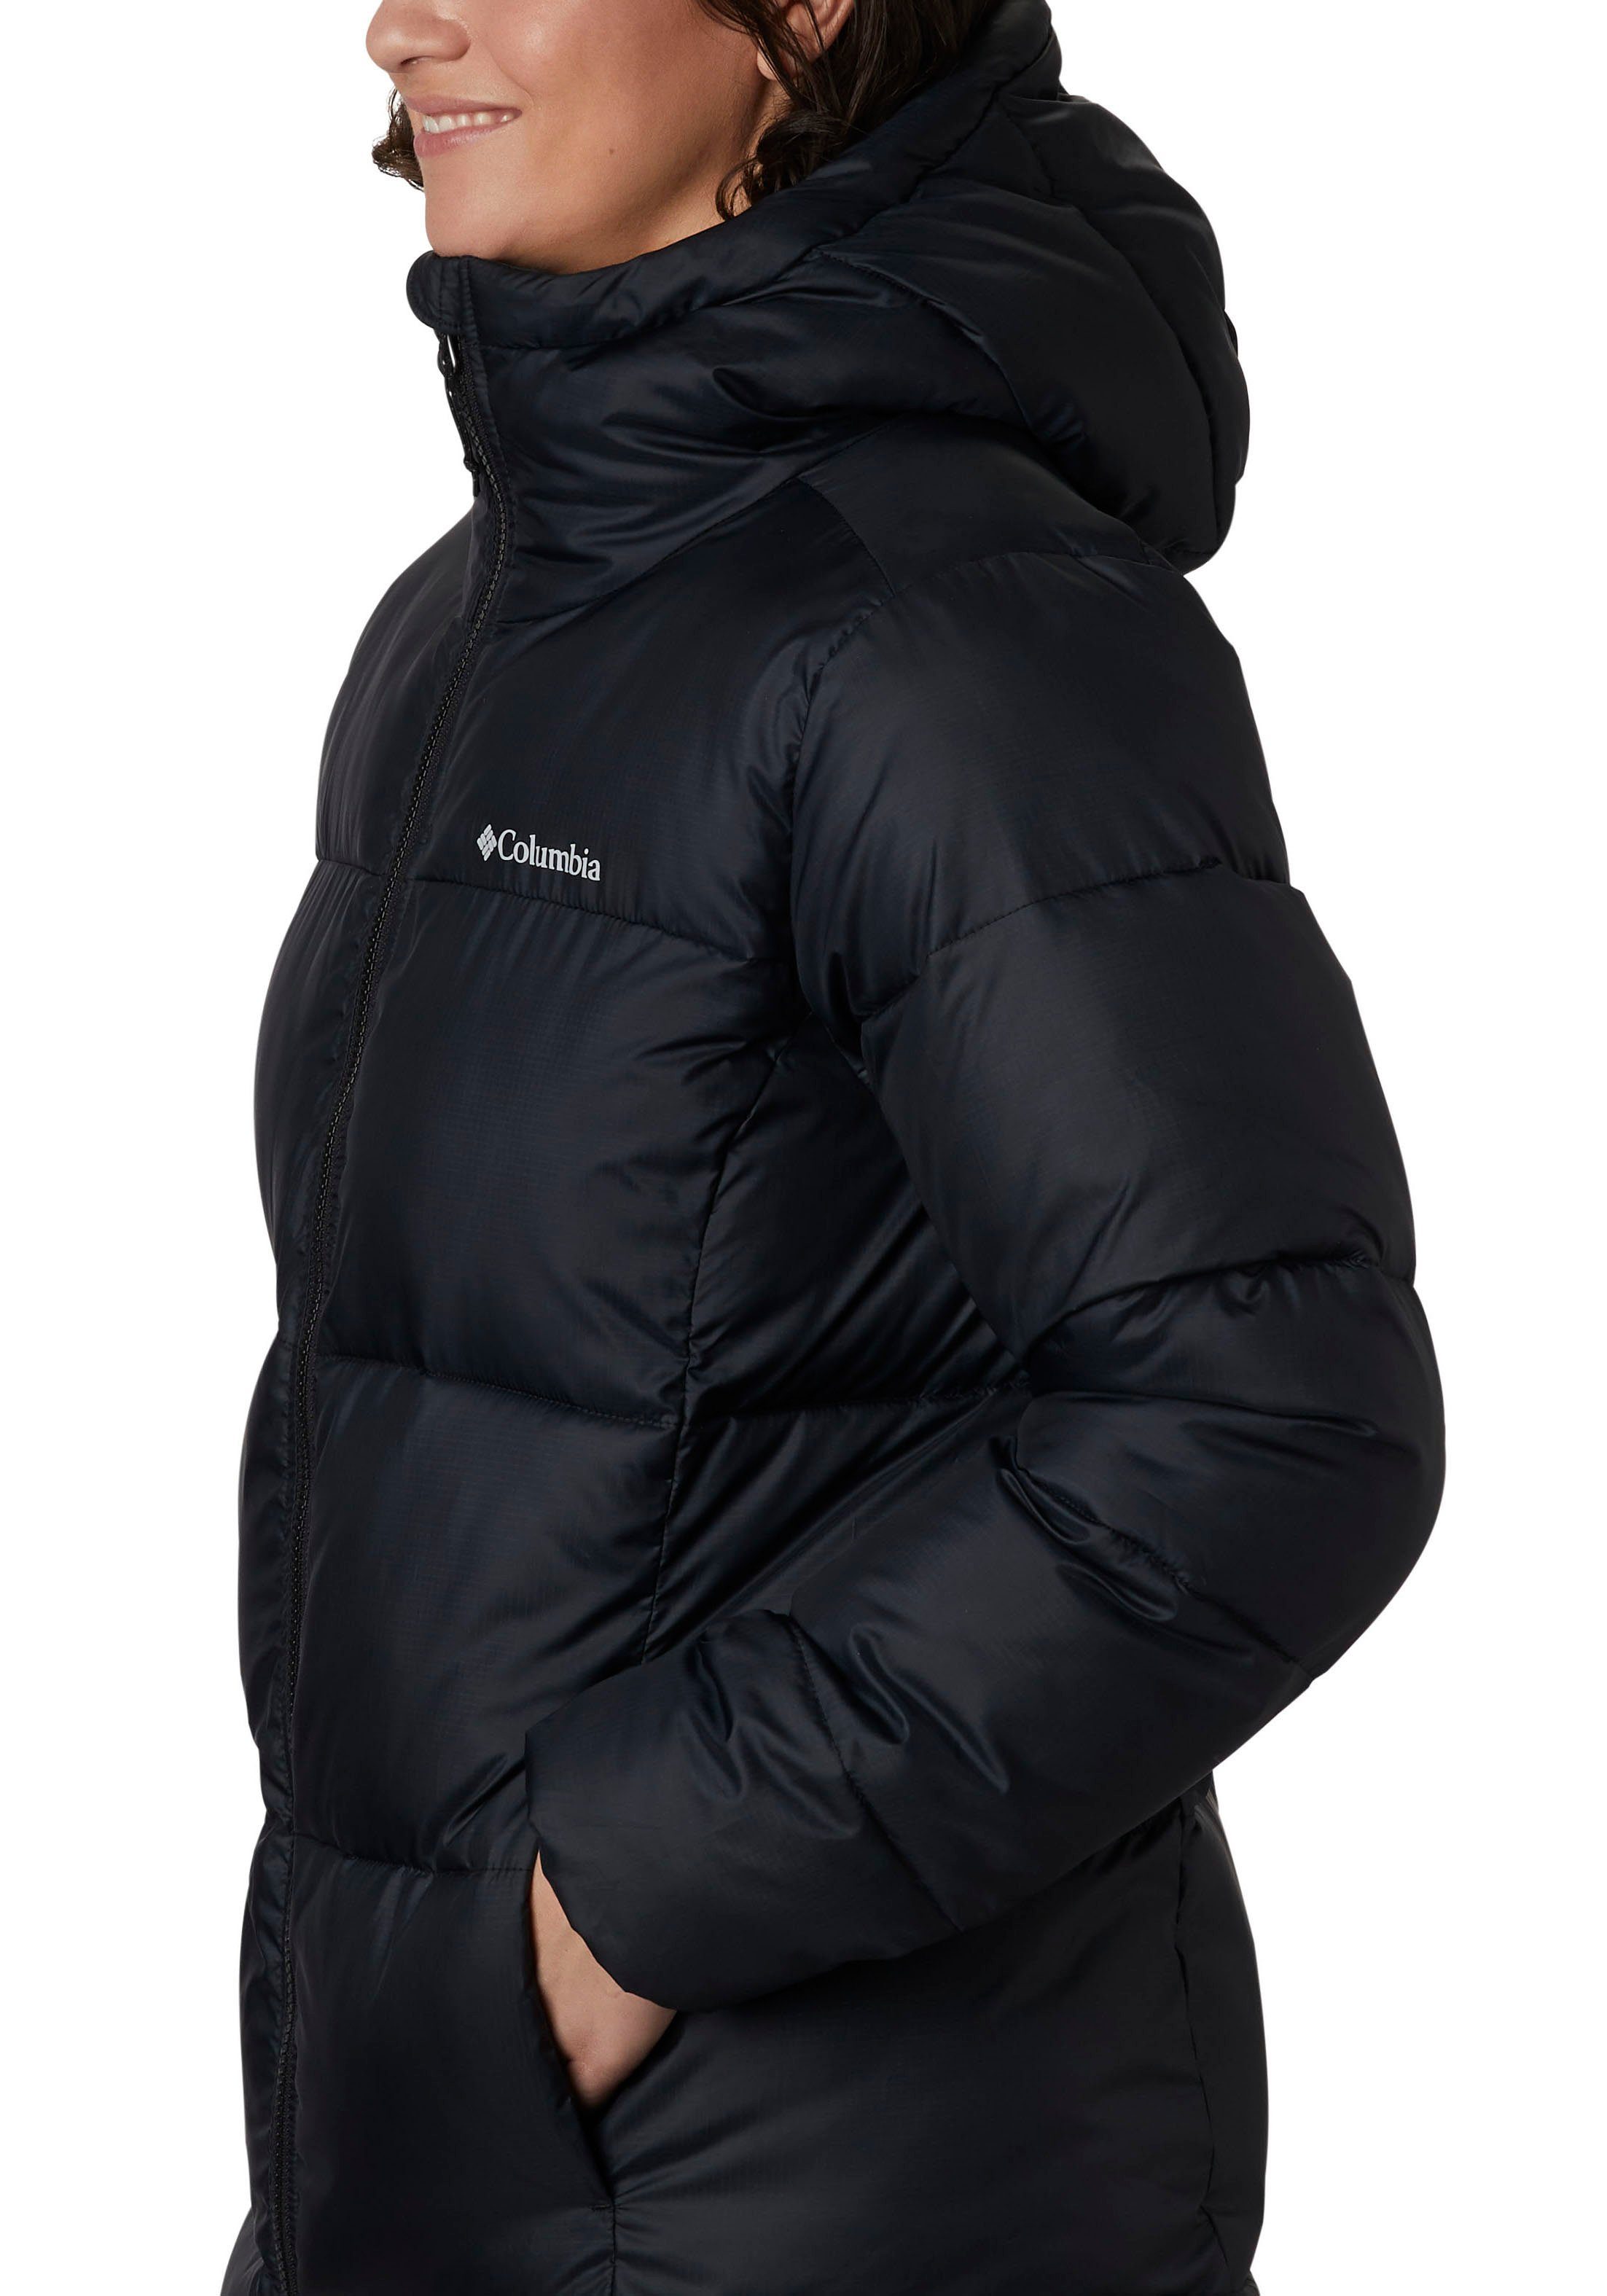 Jacket black Puffect Hooded Steppjacke Mid Columbia